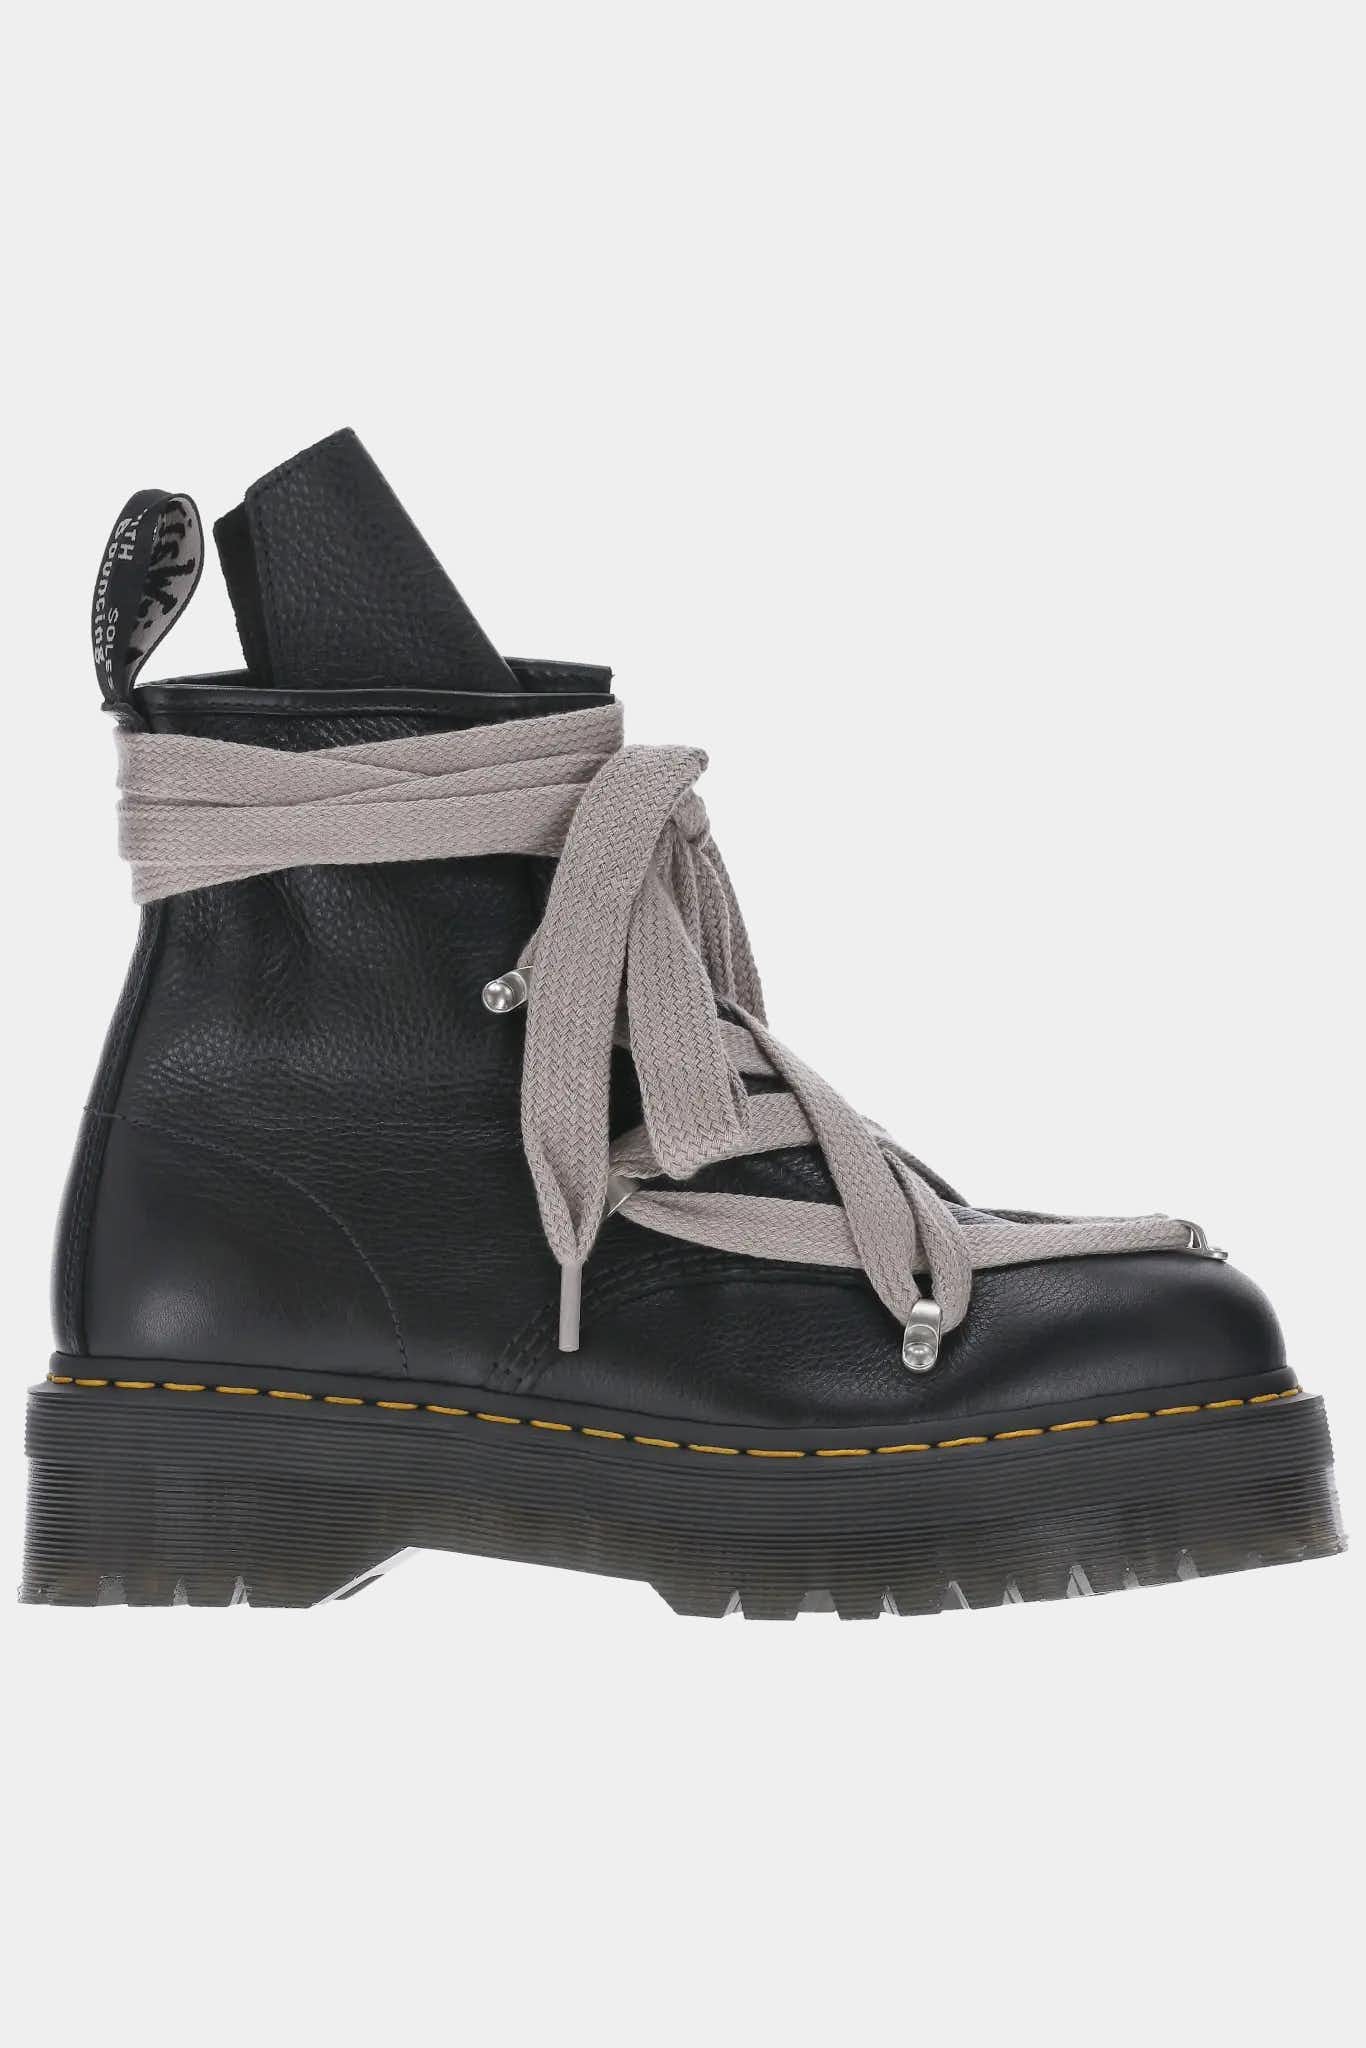 Rick Owens × Dr. Martens Boot Black 26cm - 靴